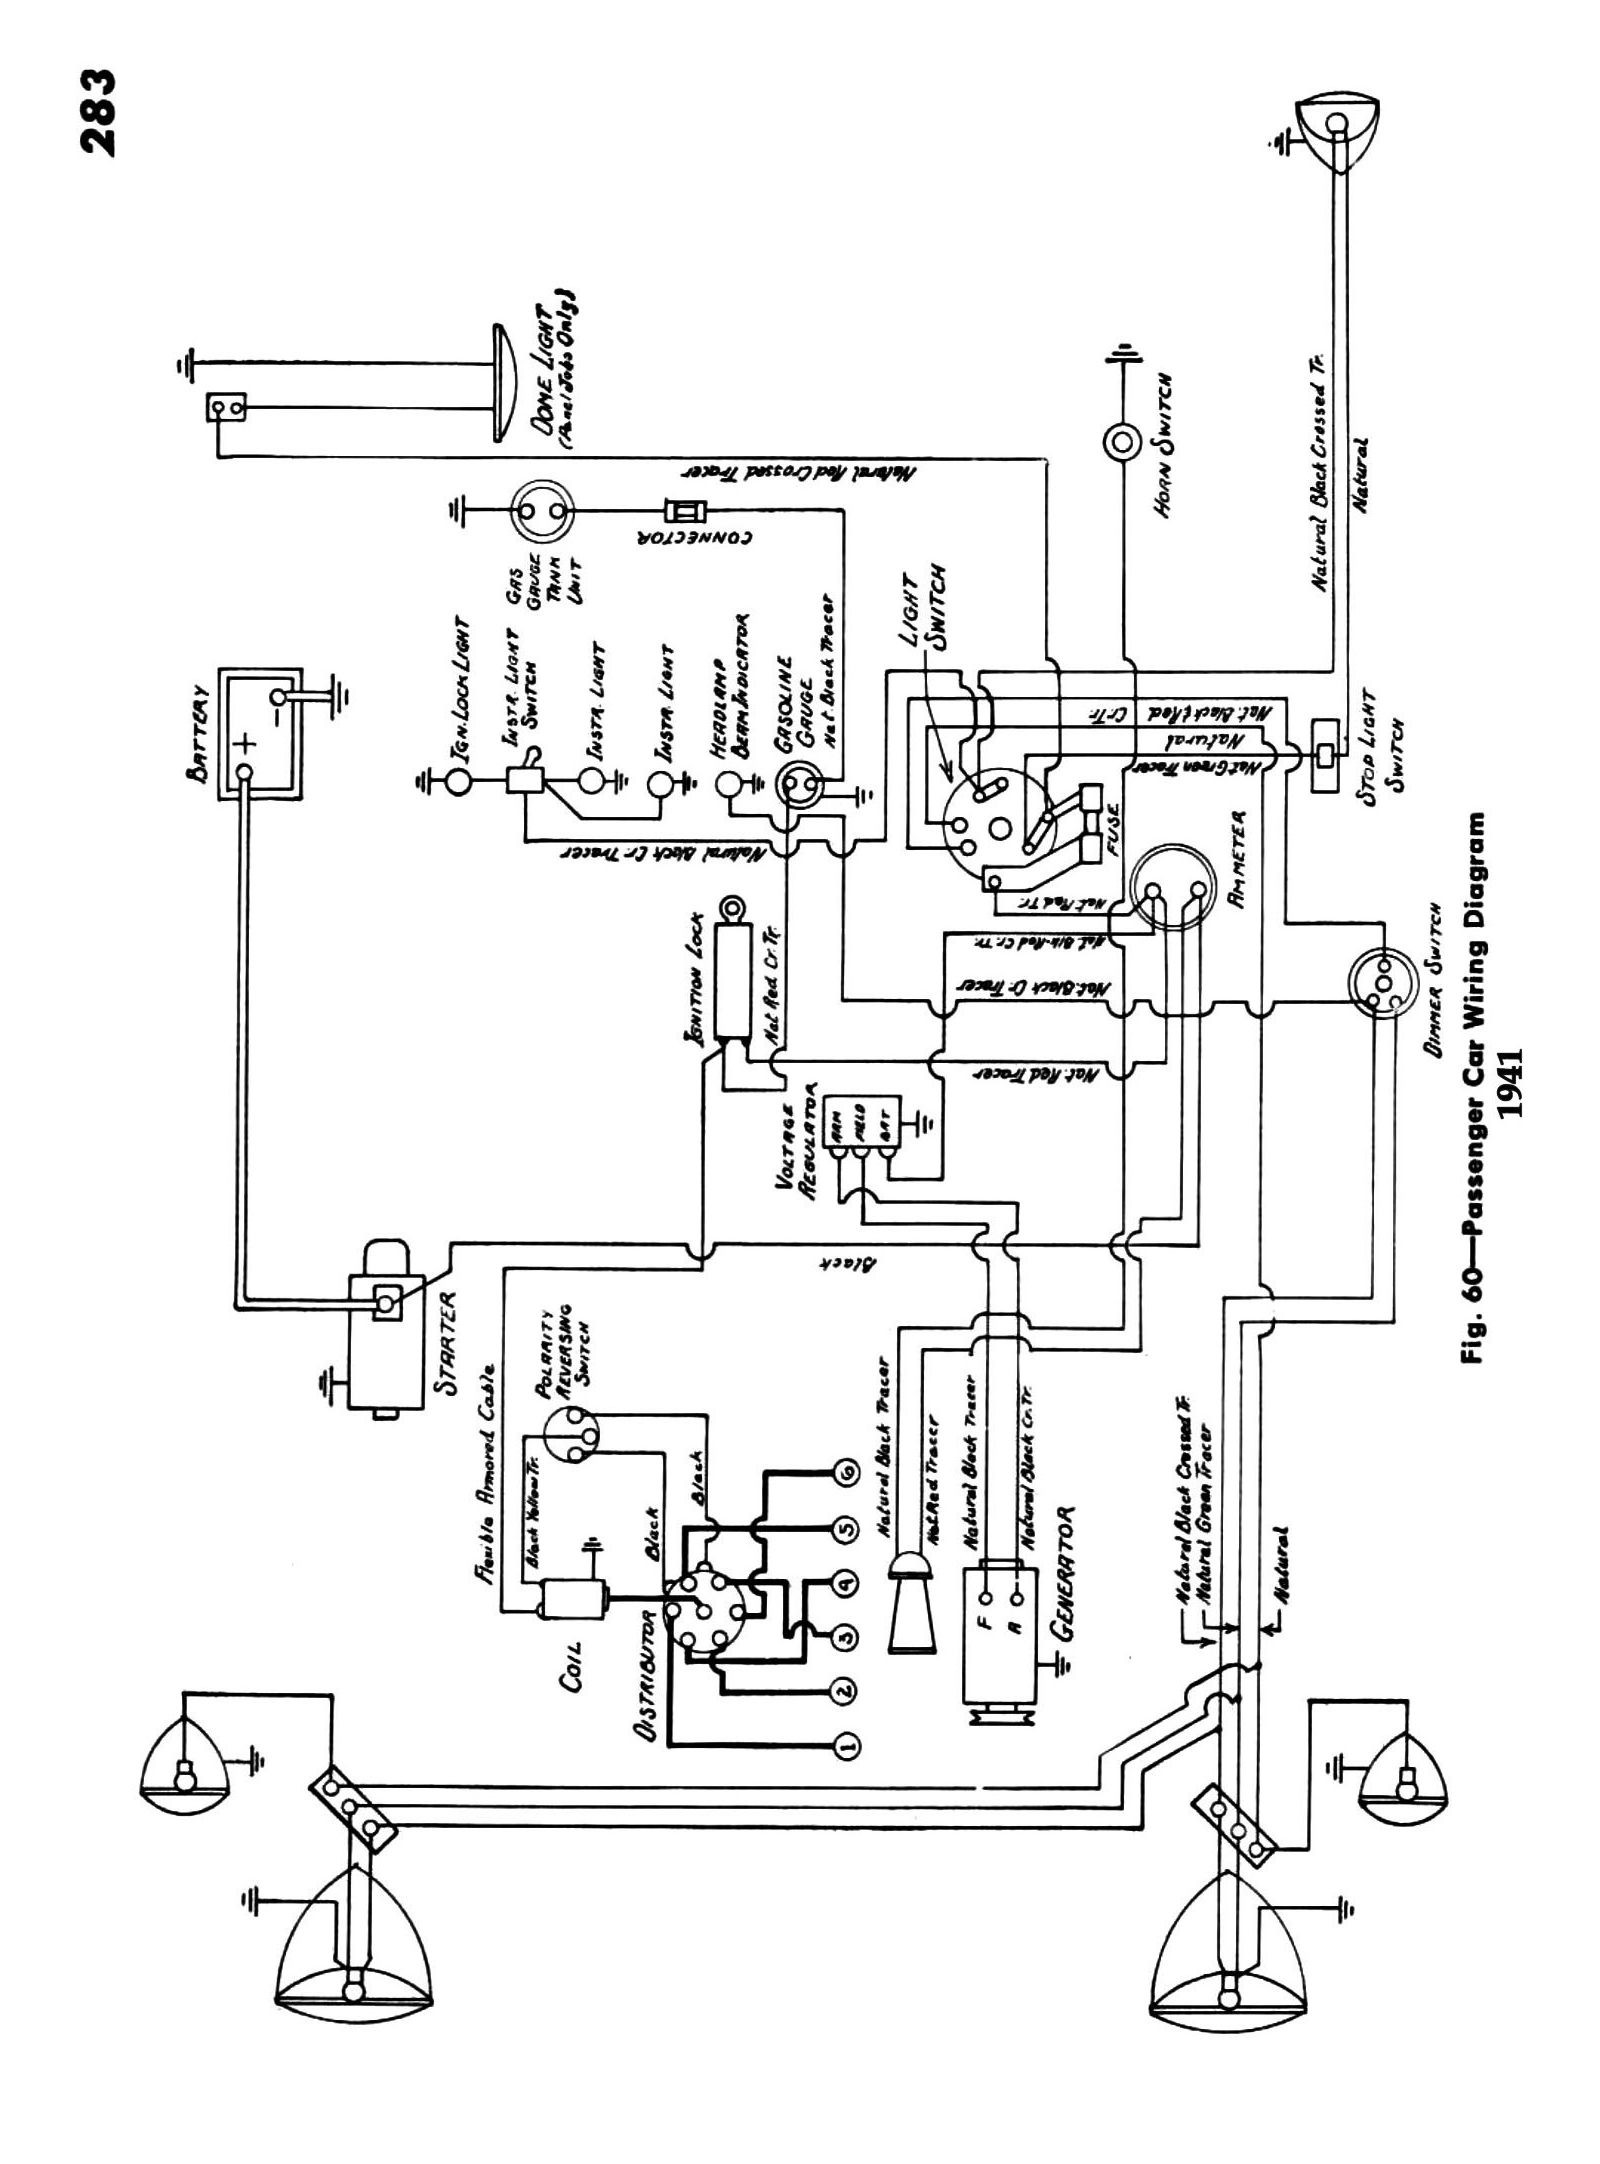 Straight Six Engine Diagram Chevy Wiring Diagrams Of Straight Six Engine Diagram